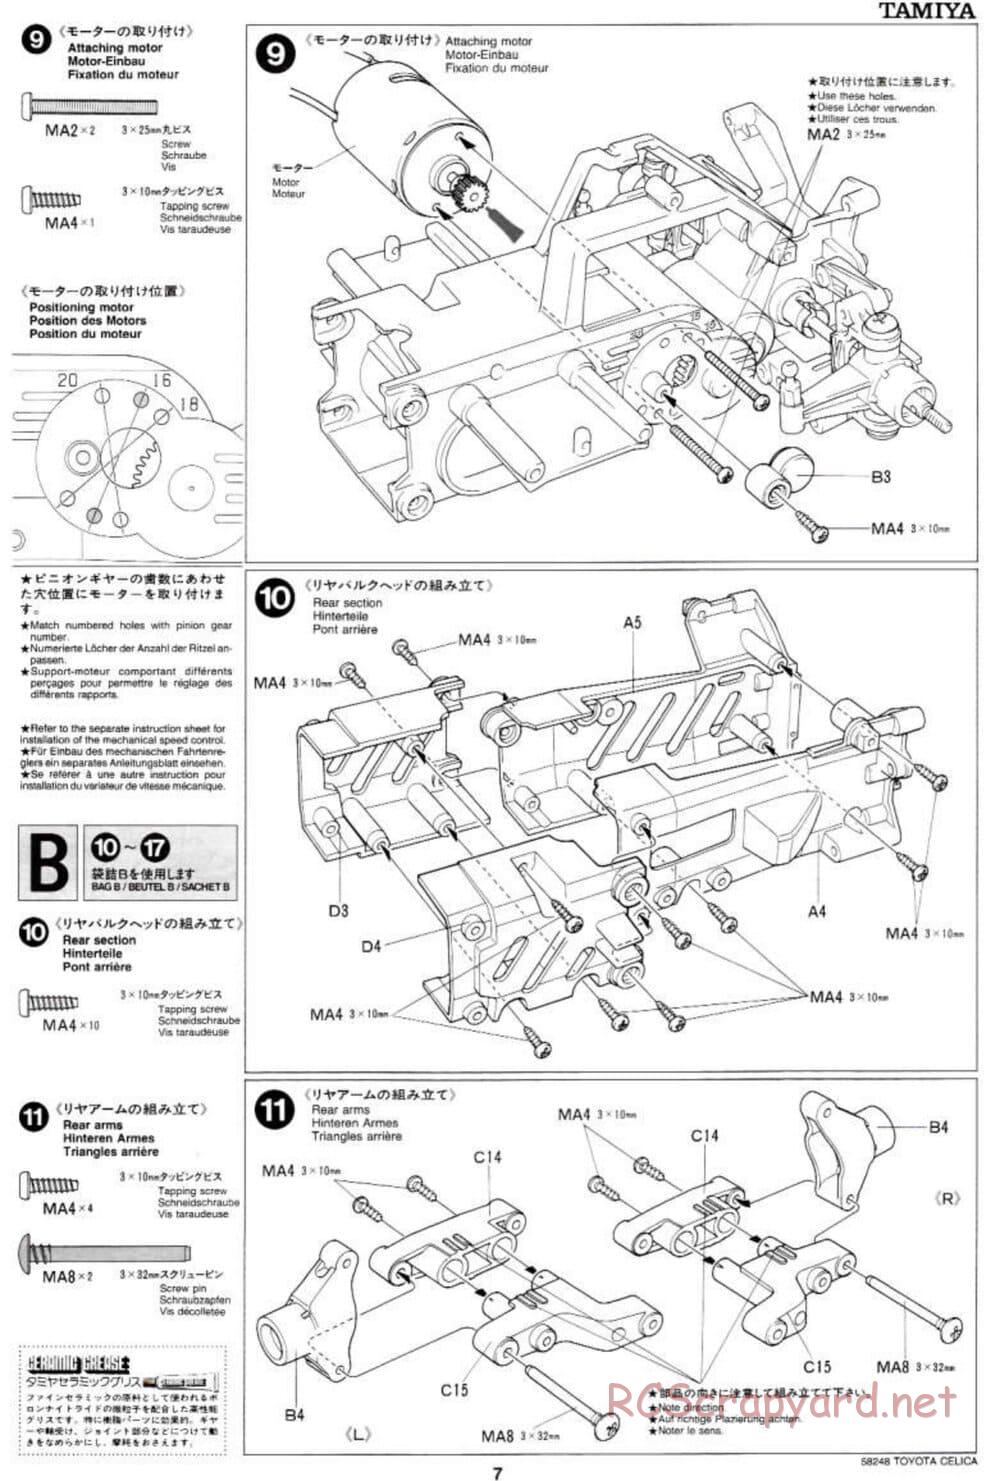 Tamiya - Toyota Celica - FF-02 Chassis - Manual - Page 7